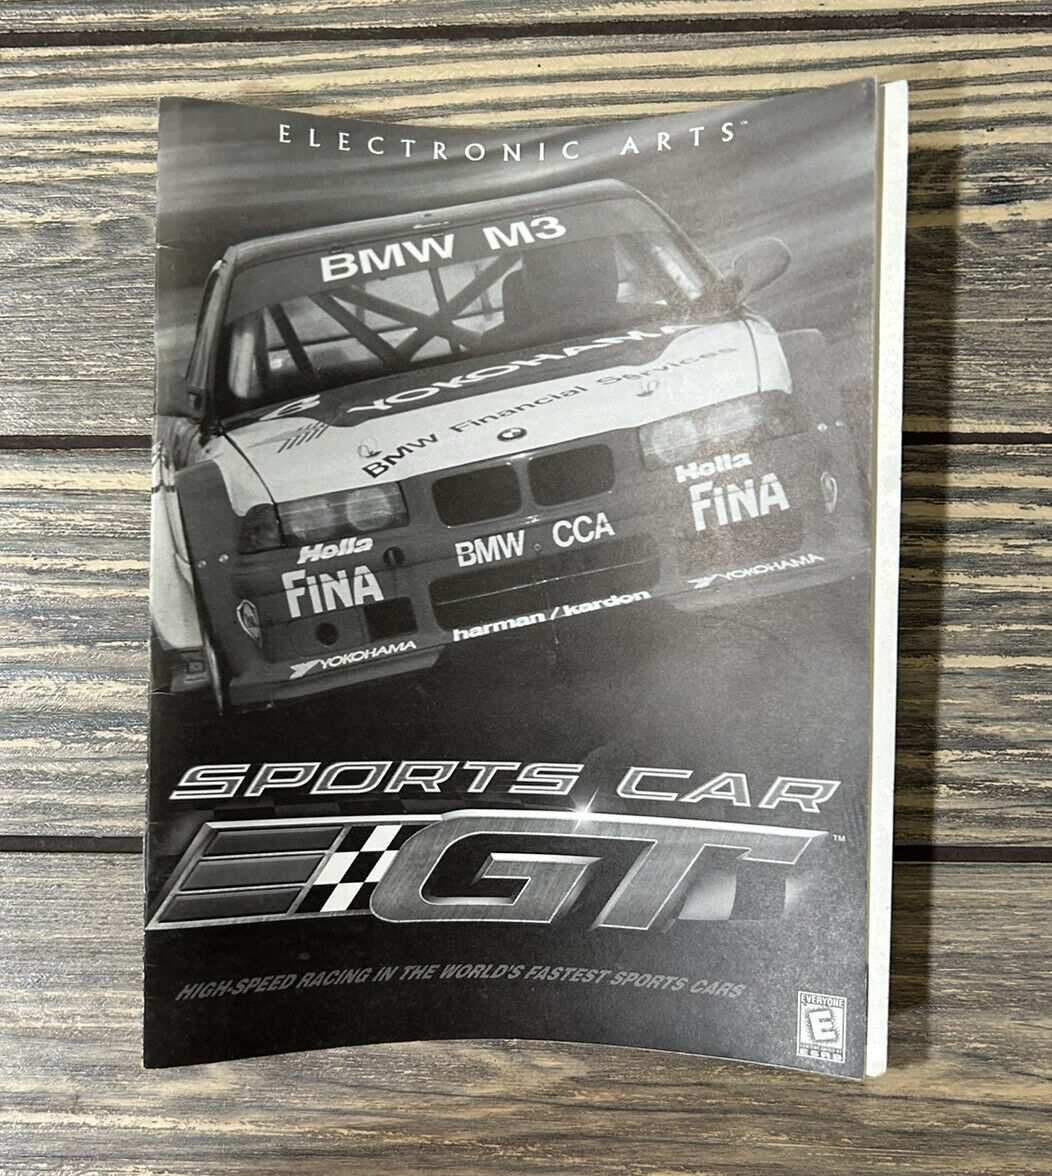 Vintage 1999 Electronic Arts Sports Car GT Computer PC Manual